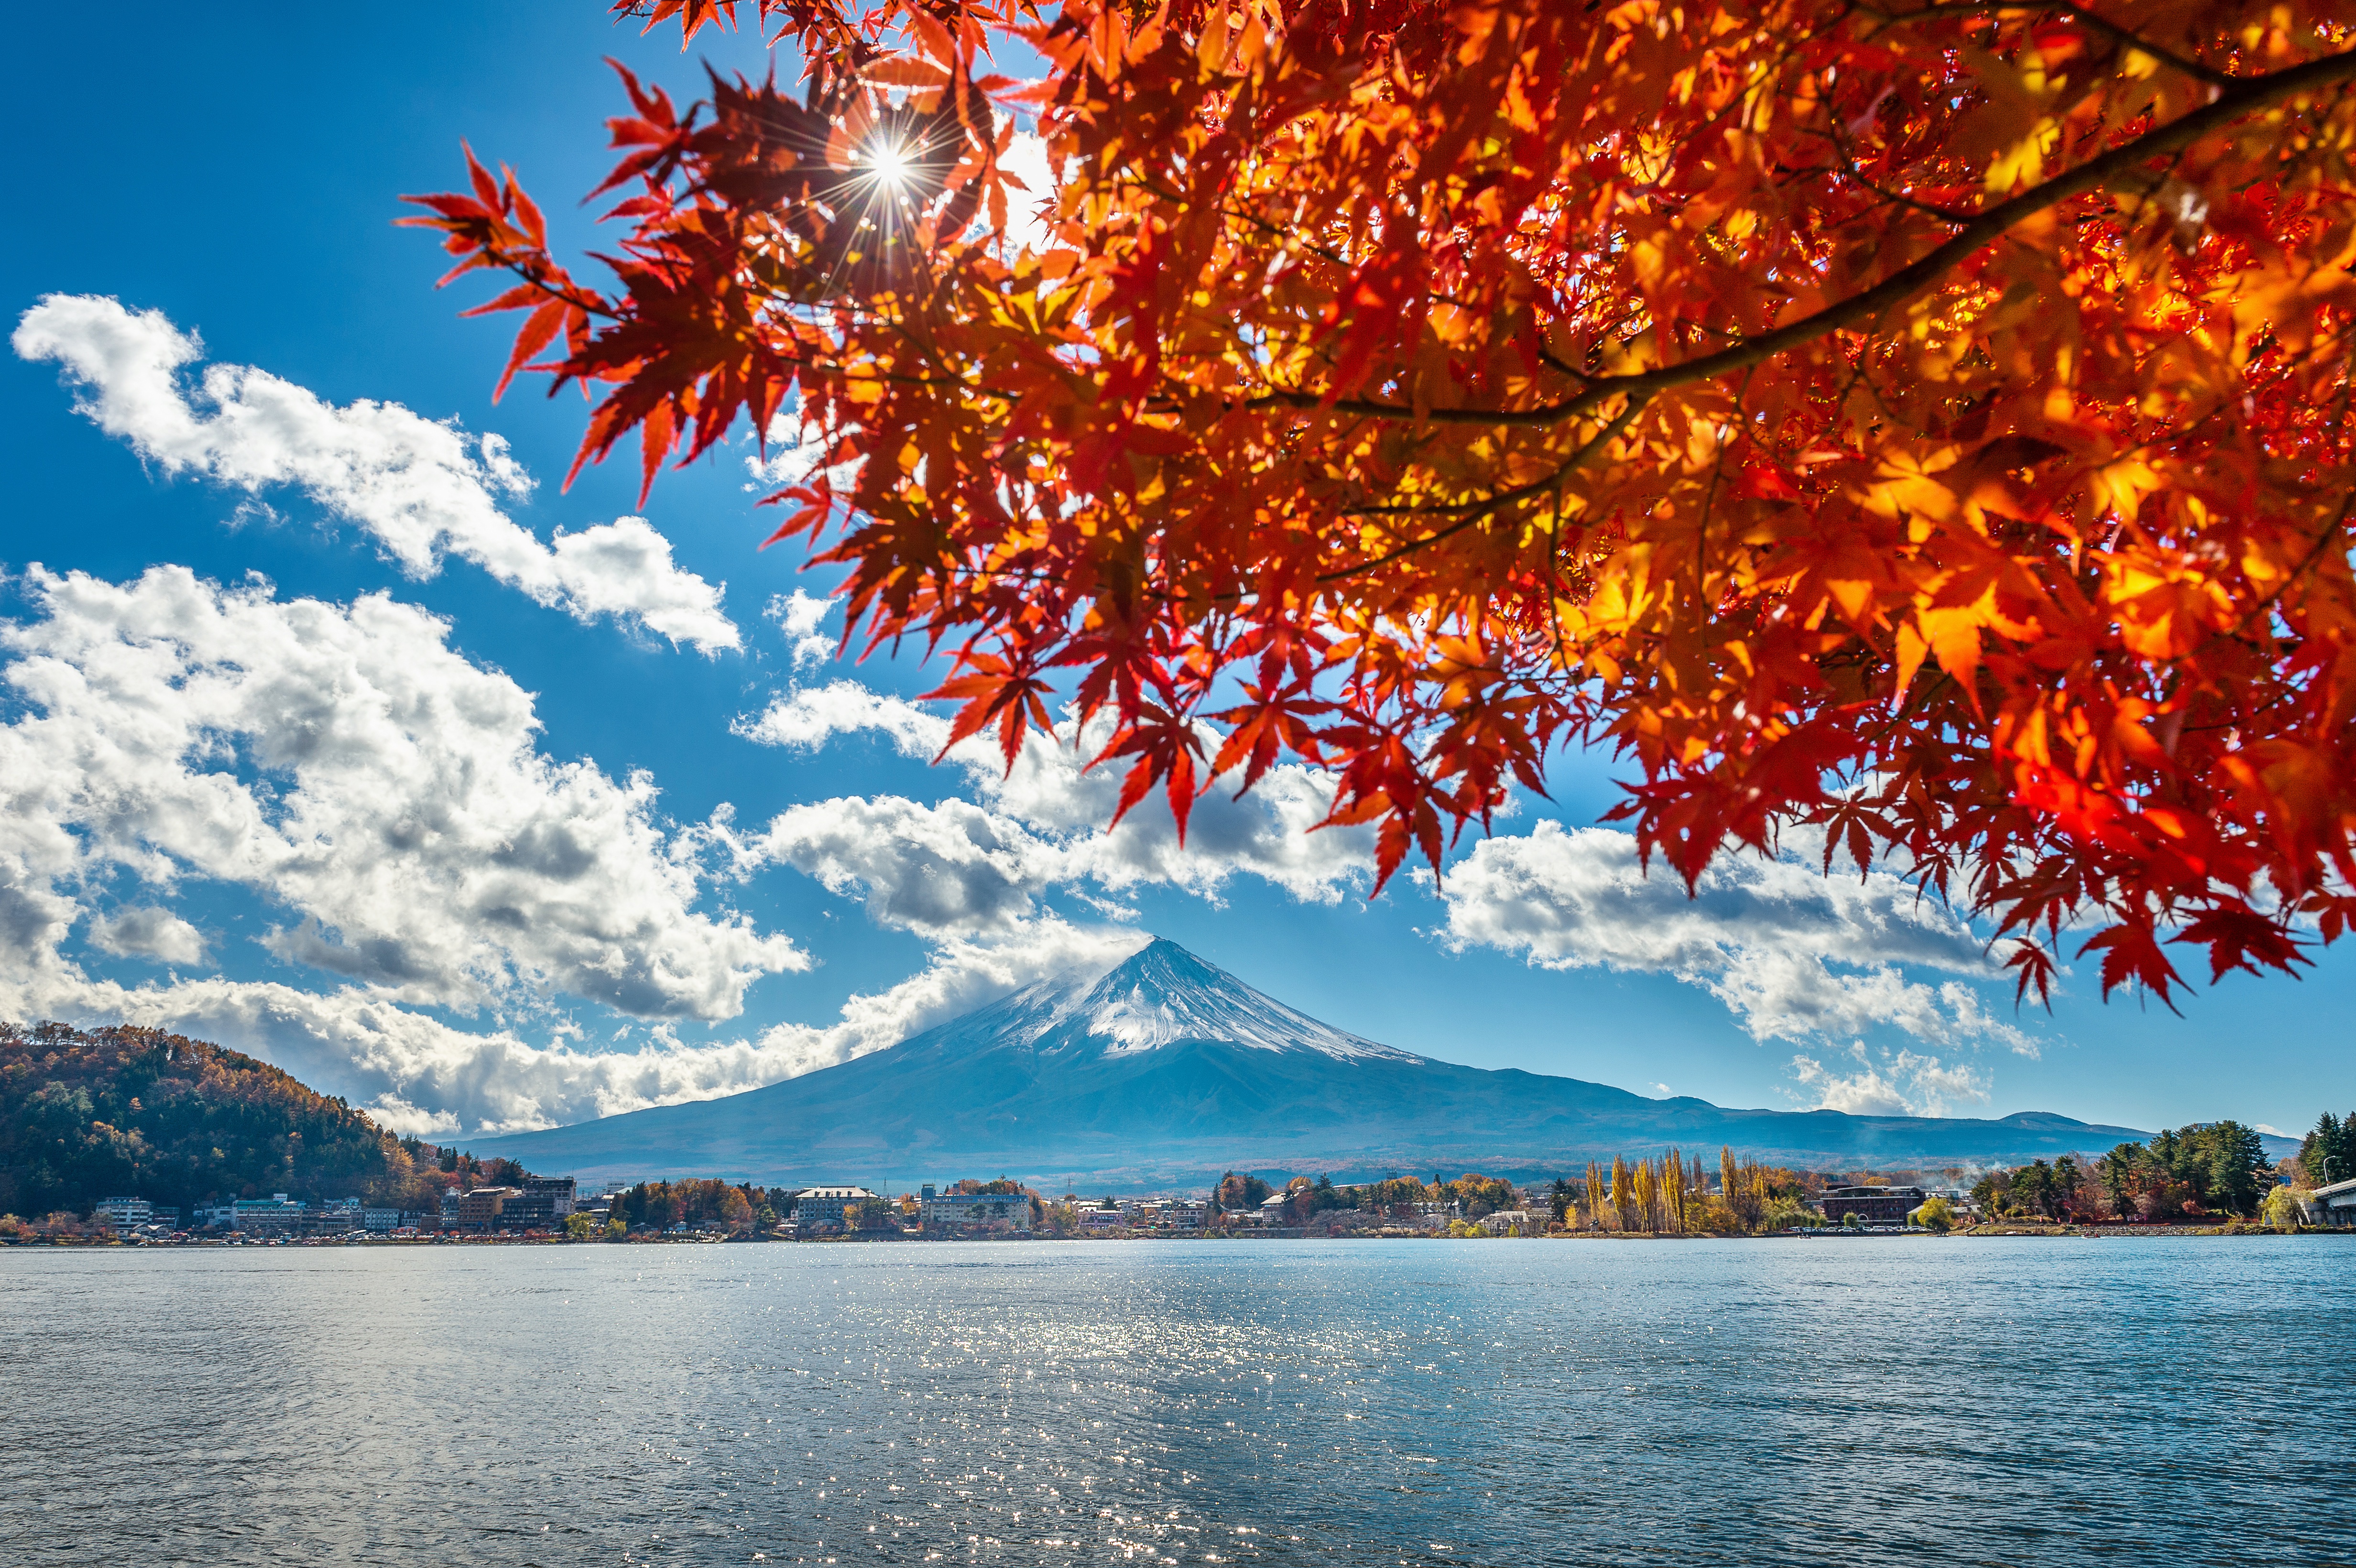 Mount Fuji 4k Ultra HD Wallpaper | Background Image | 4928x3280 | ID